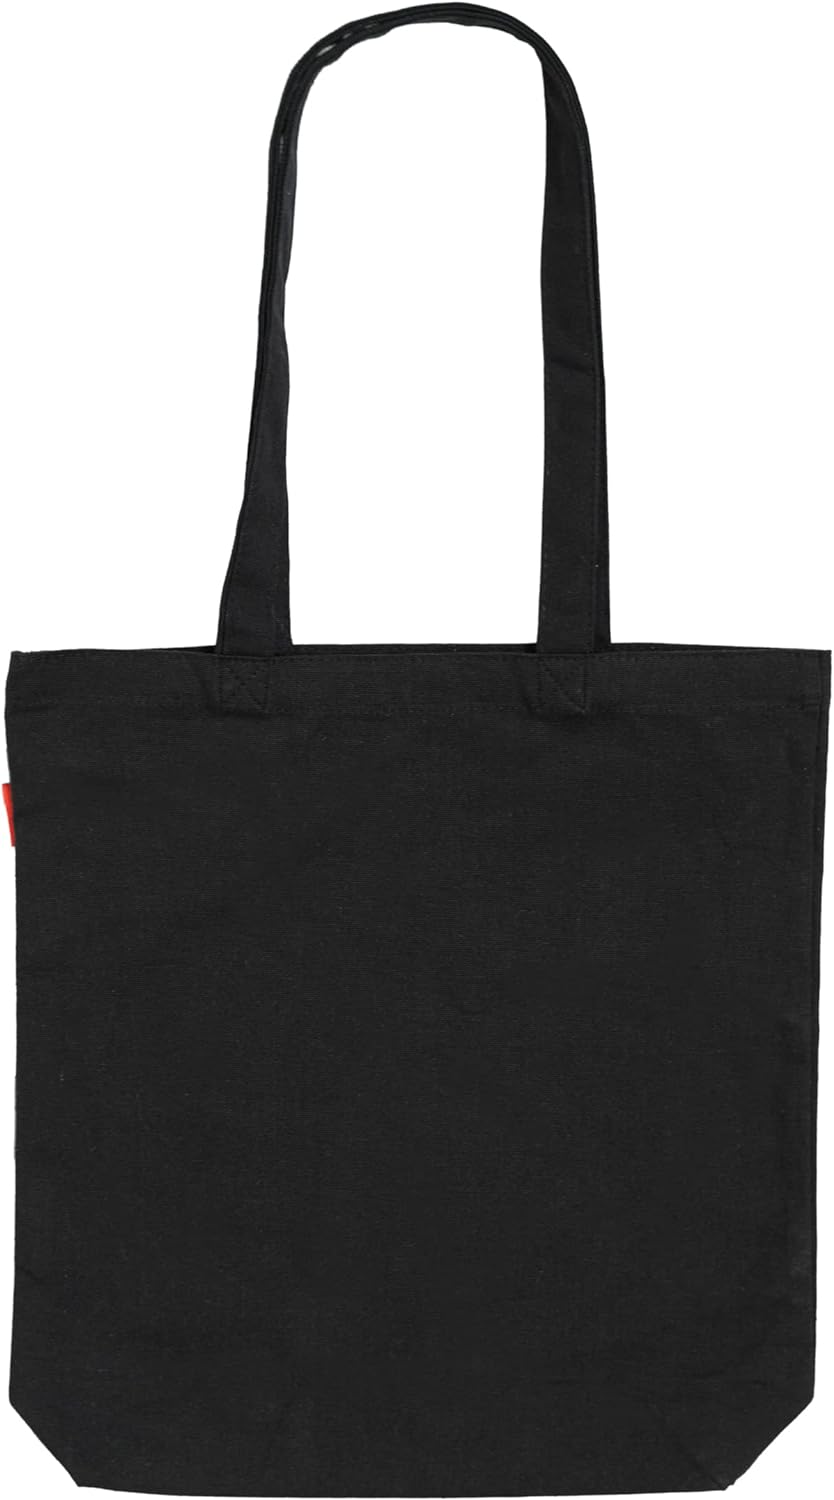 Official Stranger Things Logo Black Cotton Tote Bag - Cotton Shopping Bag